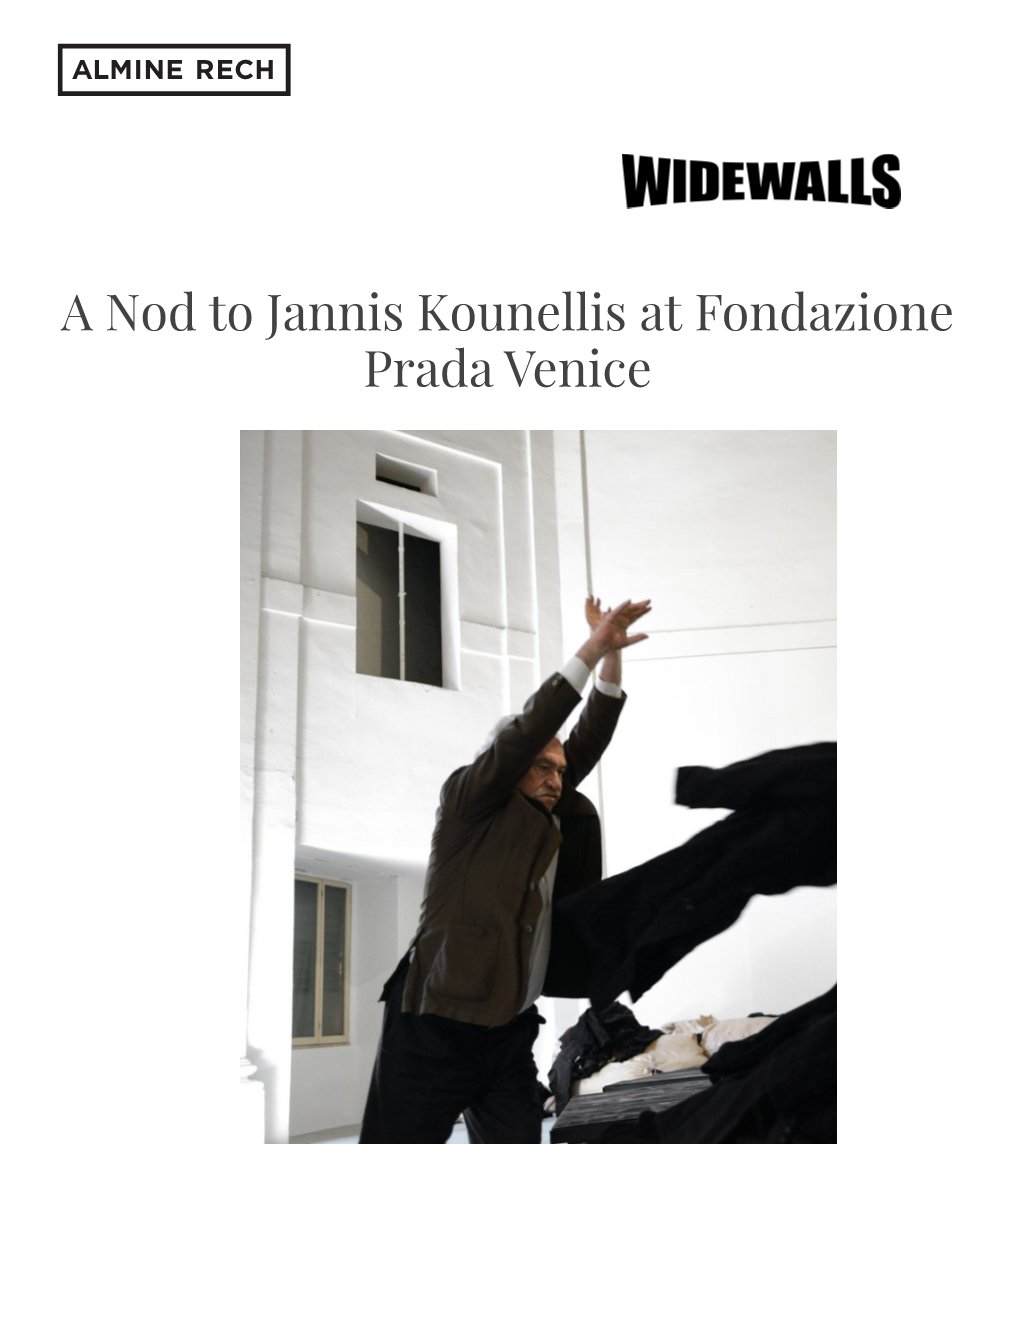 A Nod to Jannis Kounellis at Fondazione Prada Venice